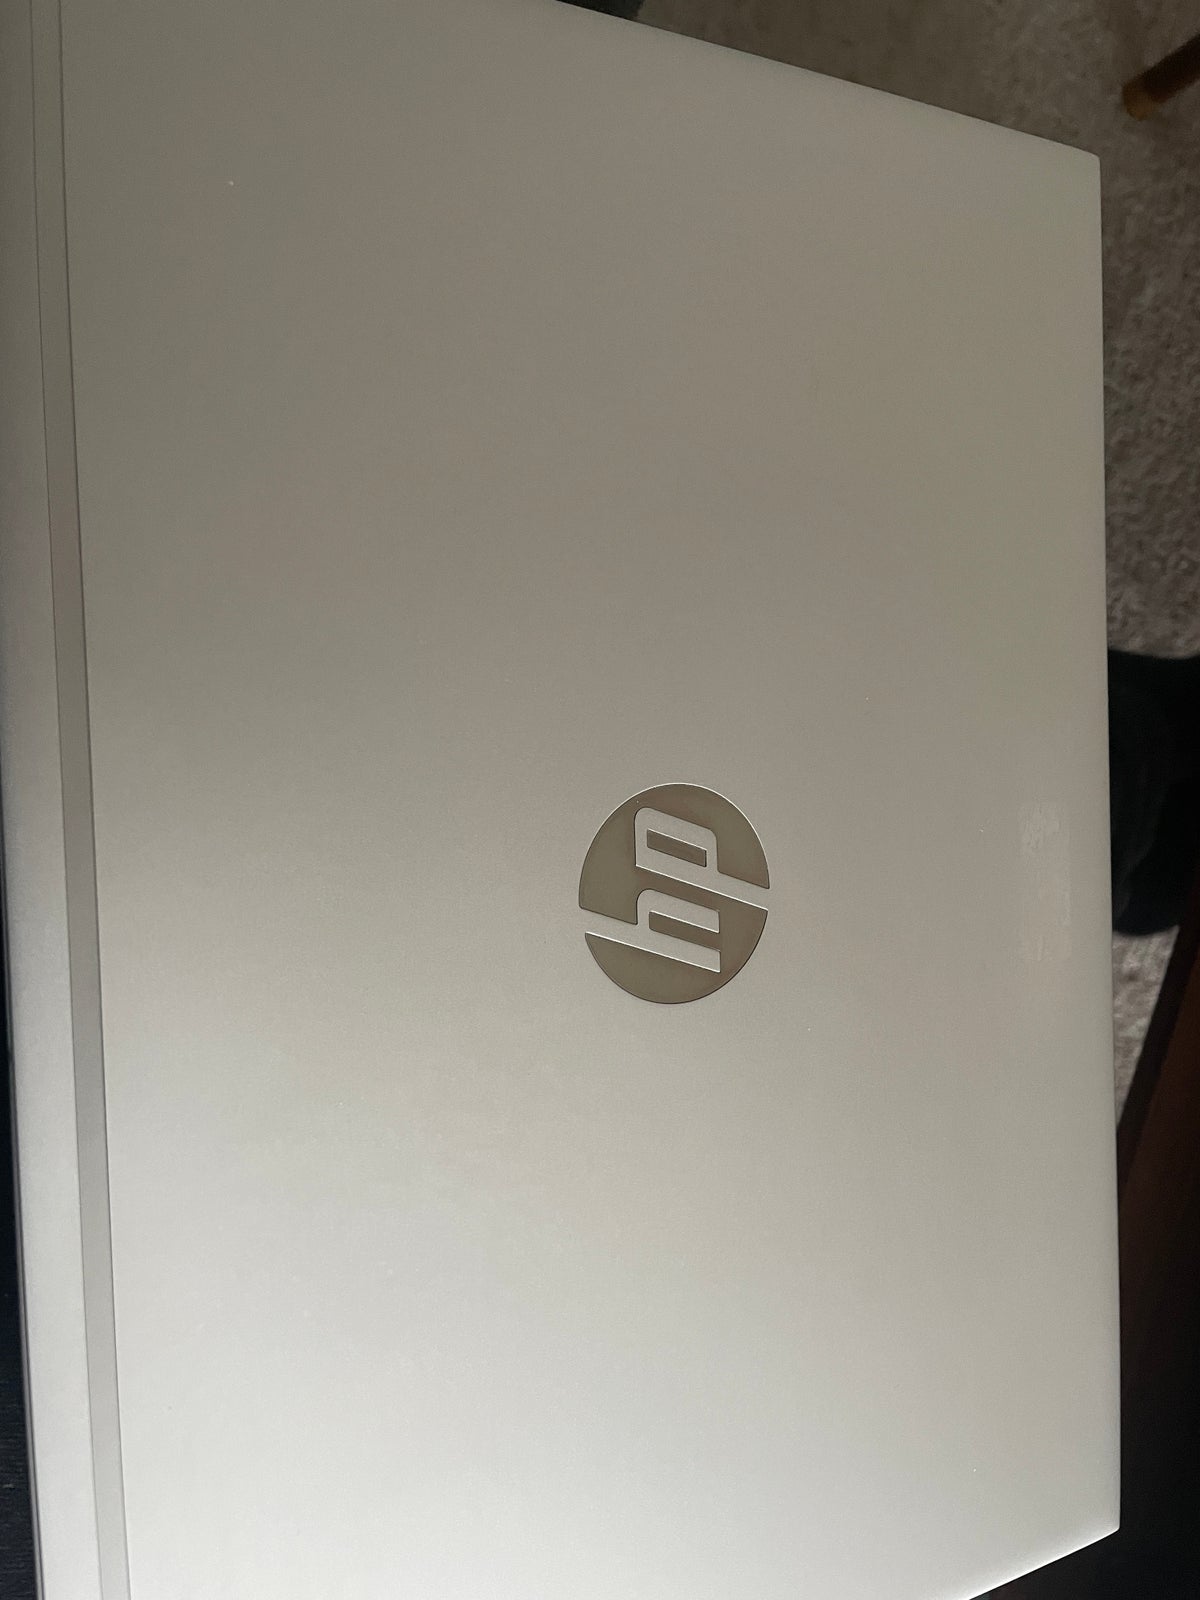 HP ProBook 430 G7, Ryzen-5 GHz, 8 GB ram